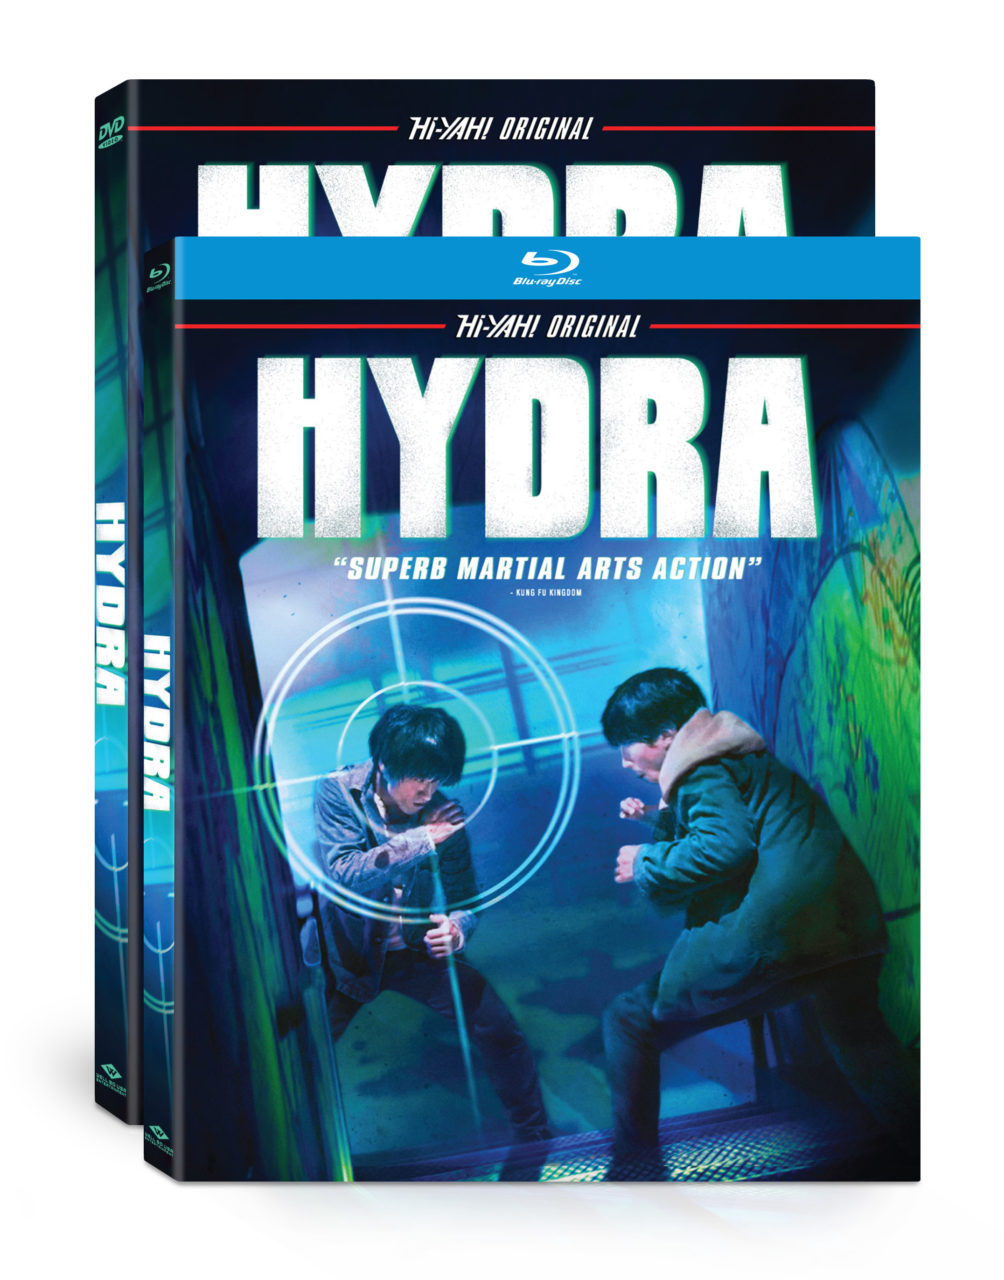 Hydra Blu-Ray and DVD cover (Well Go USA/Hi-YAH!)